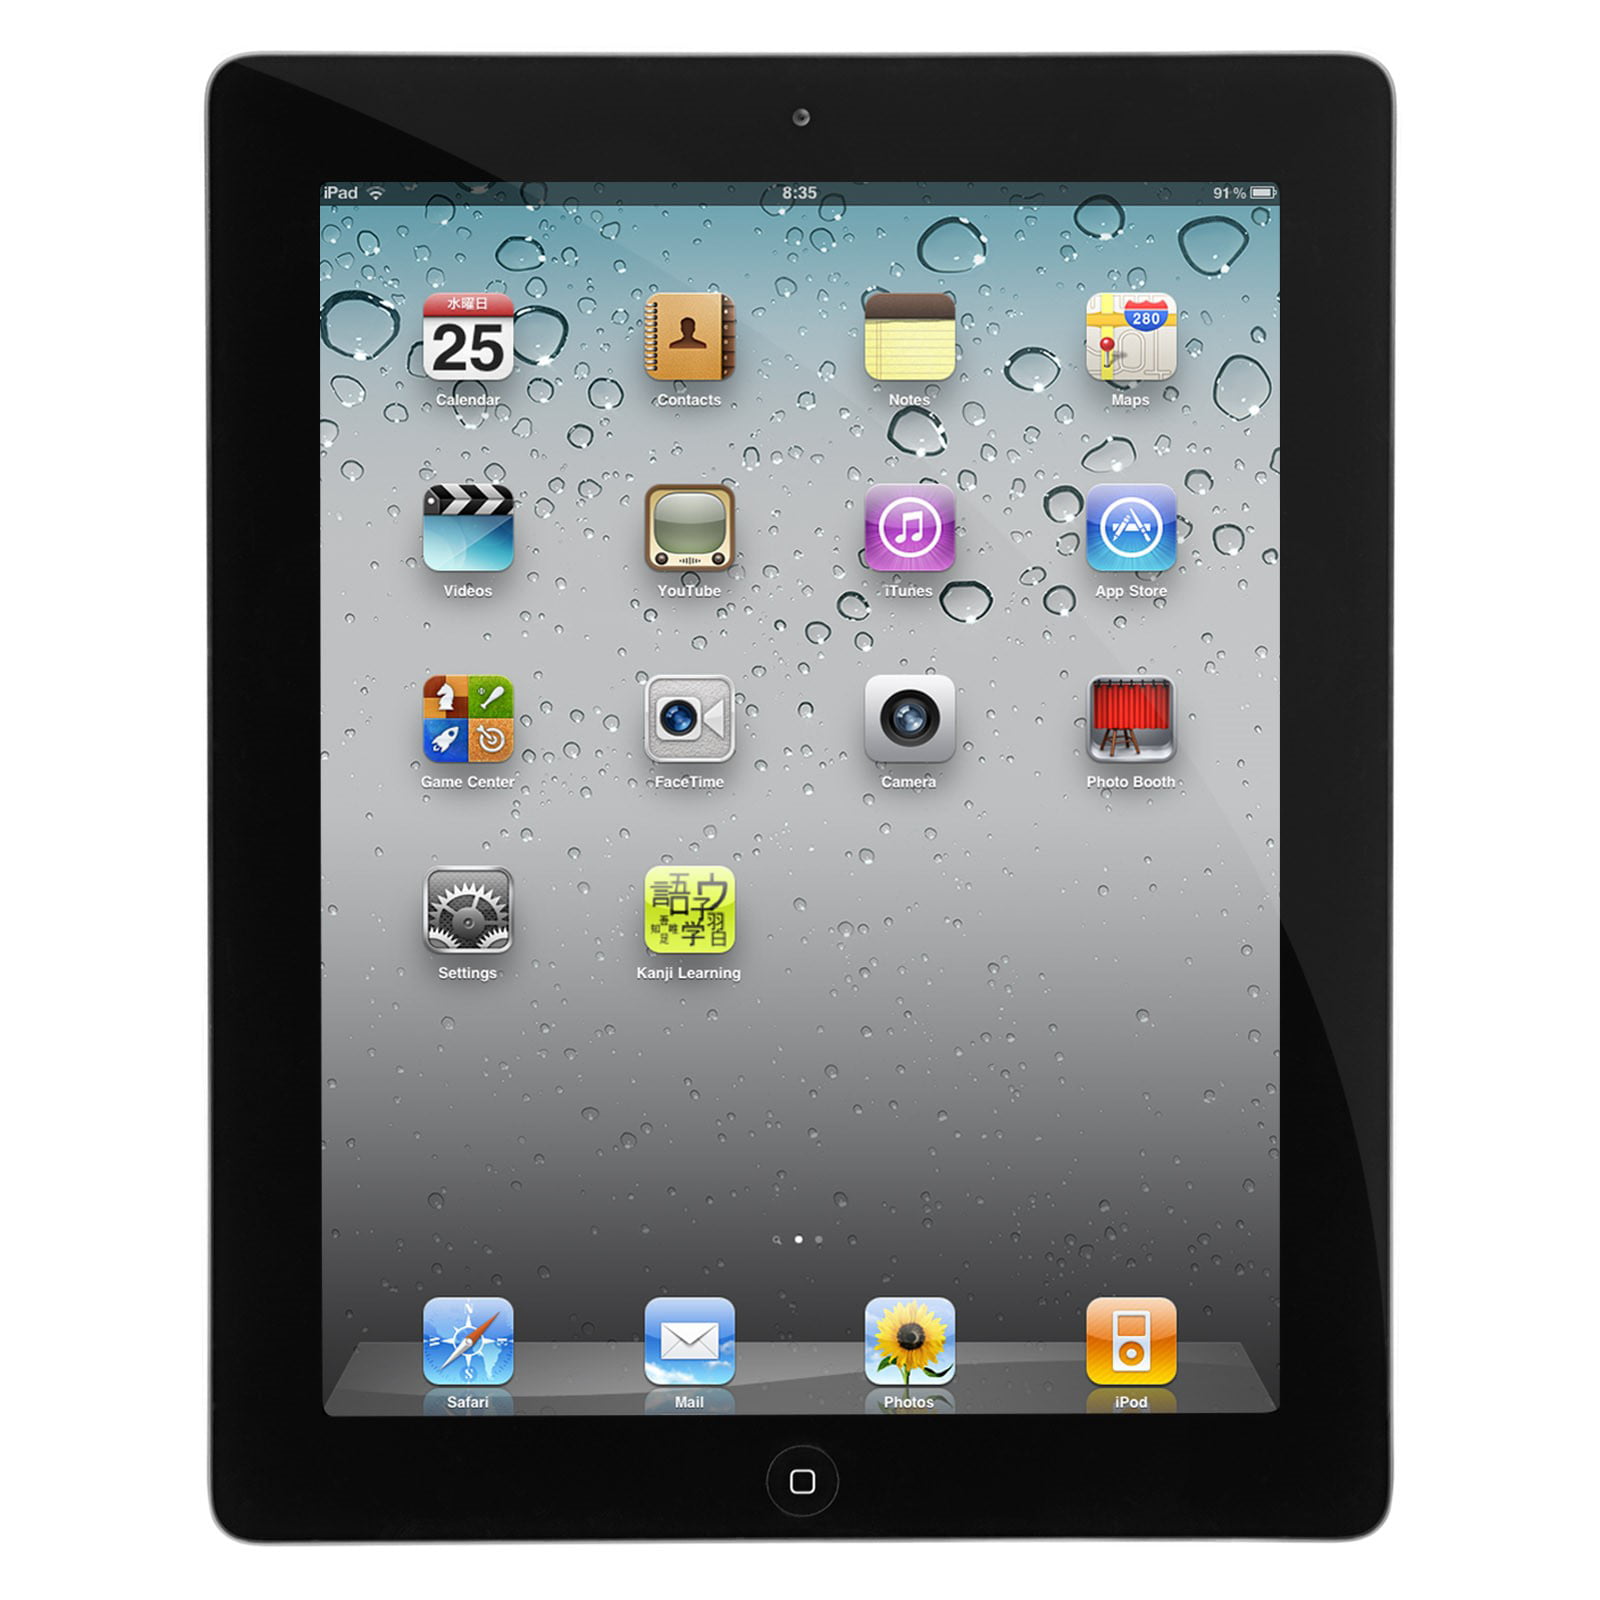 Apple iPad 2 16GB Wi-Fi Cellular Verizon 9.7in Black 